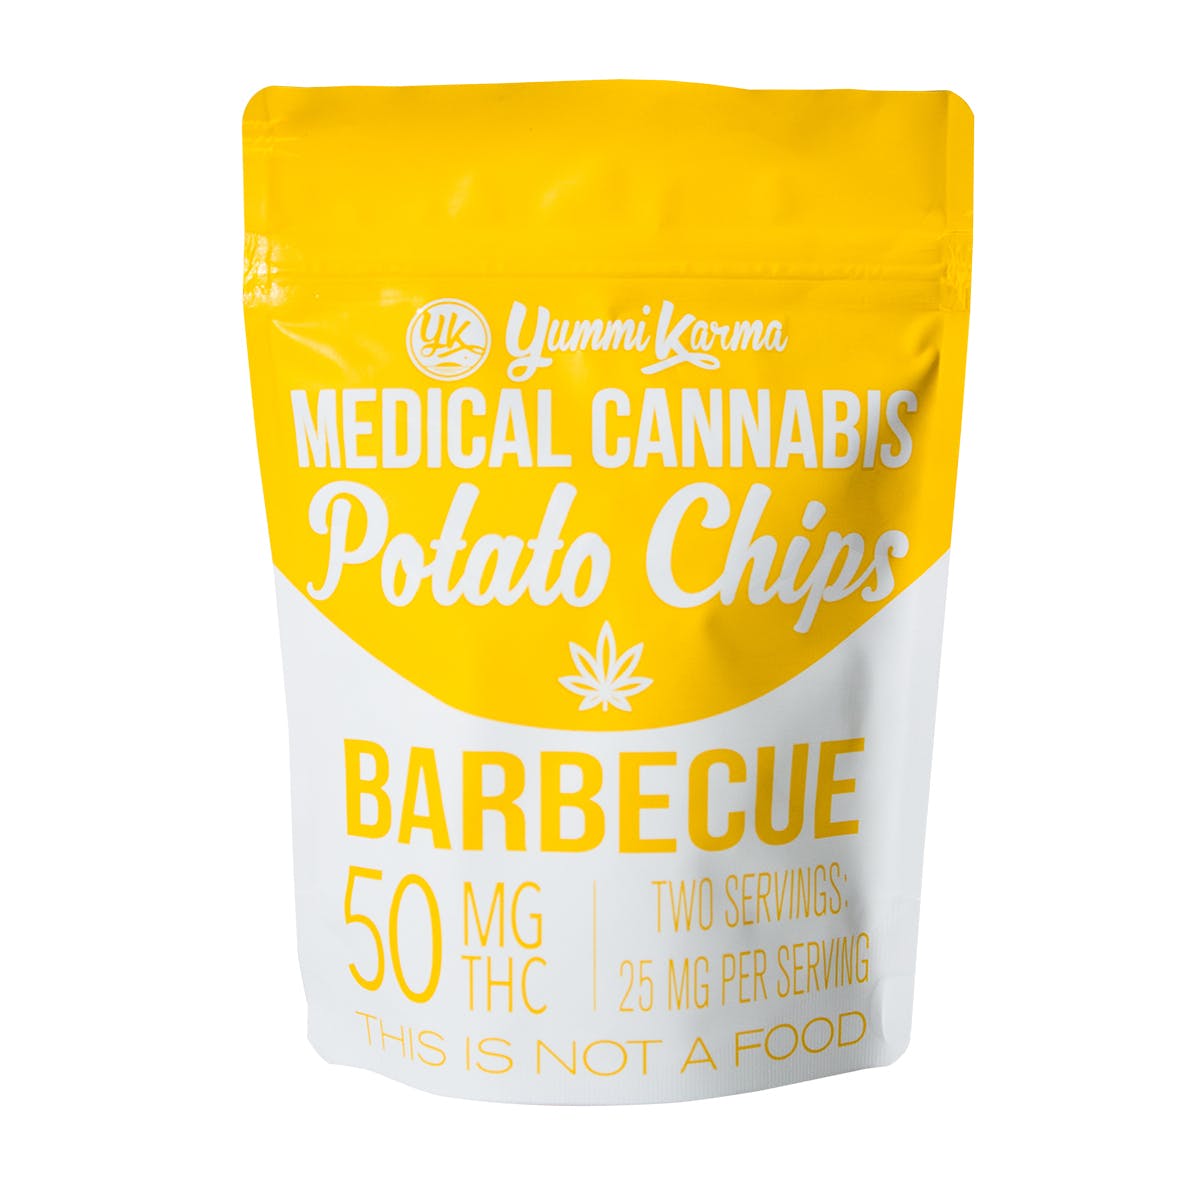 marijuana-dispensaries-natural-healing-remedies-in-bakersfield-medical-cannabis-potato-chips-2c-barbecue-50mg